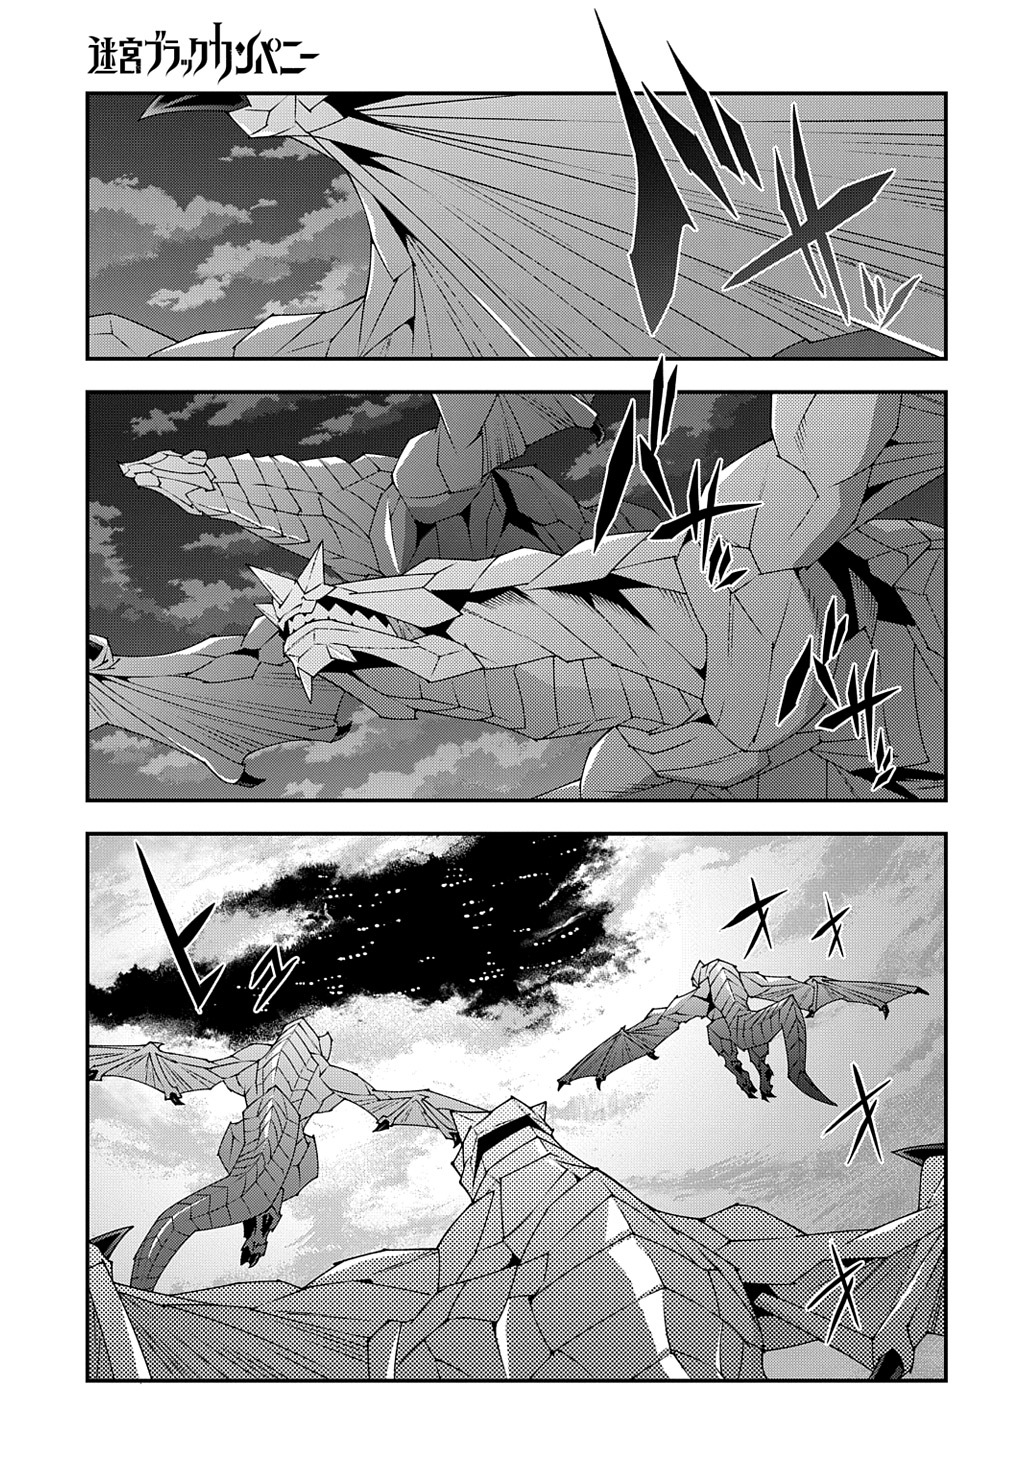 Meikyuu Black Company - Chapter 2 - Page 1 / Raw